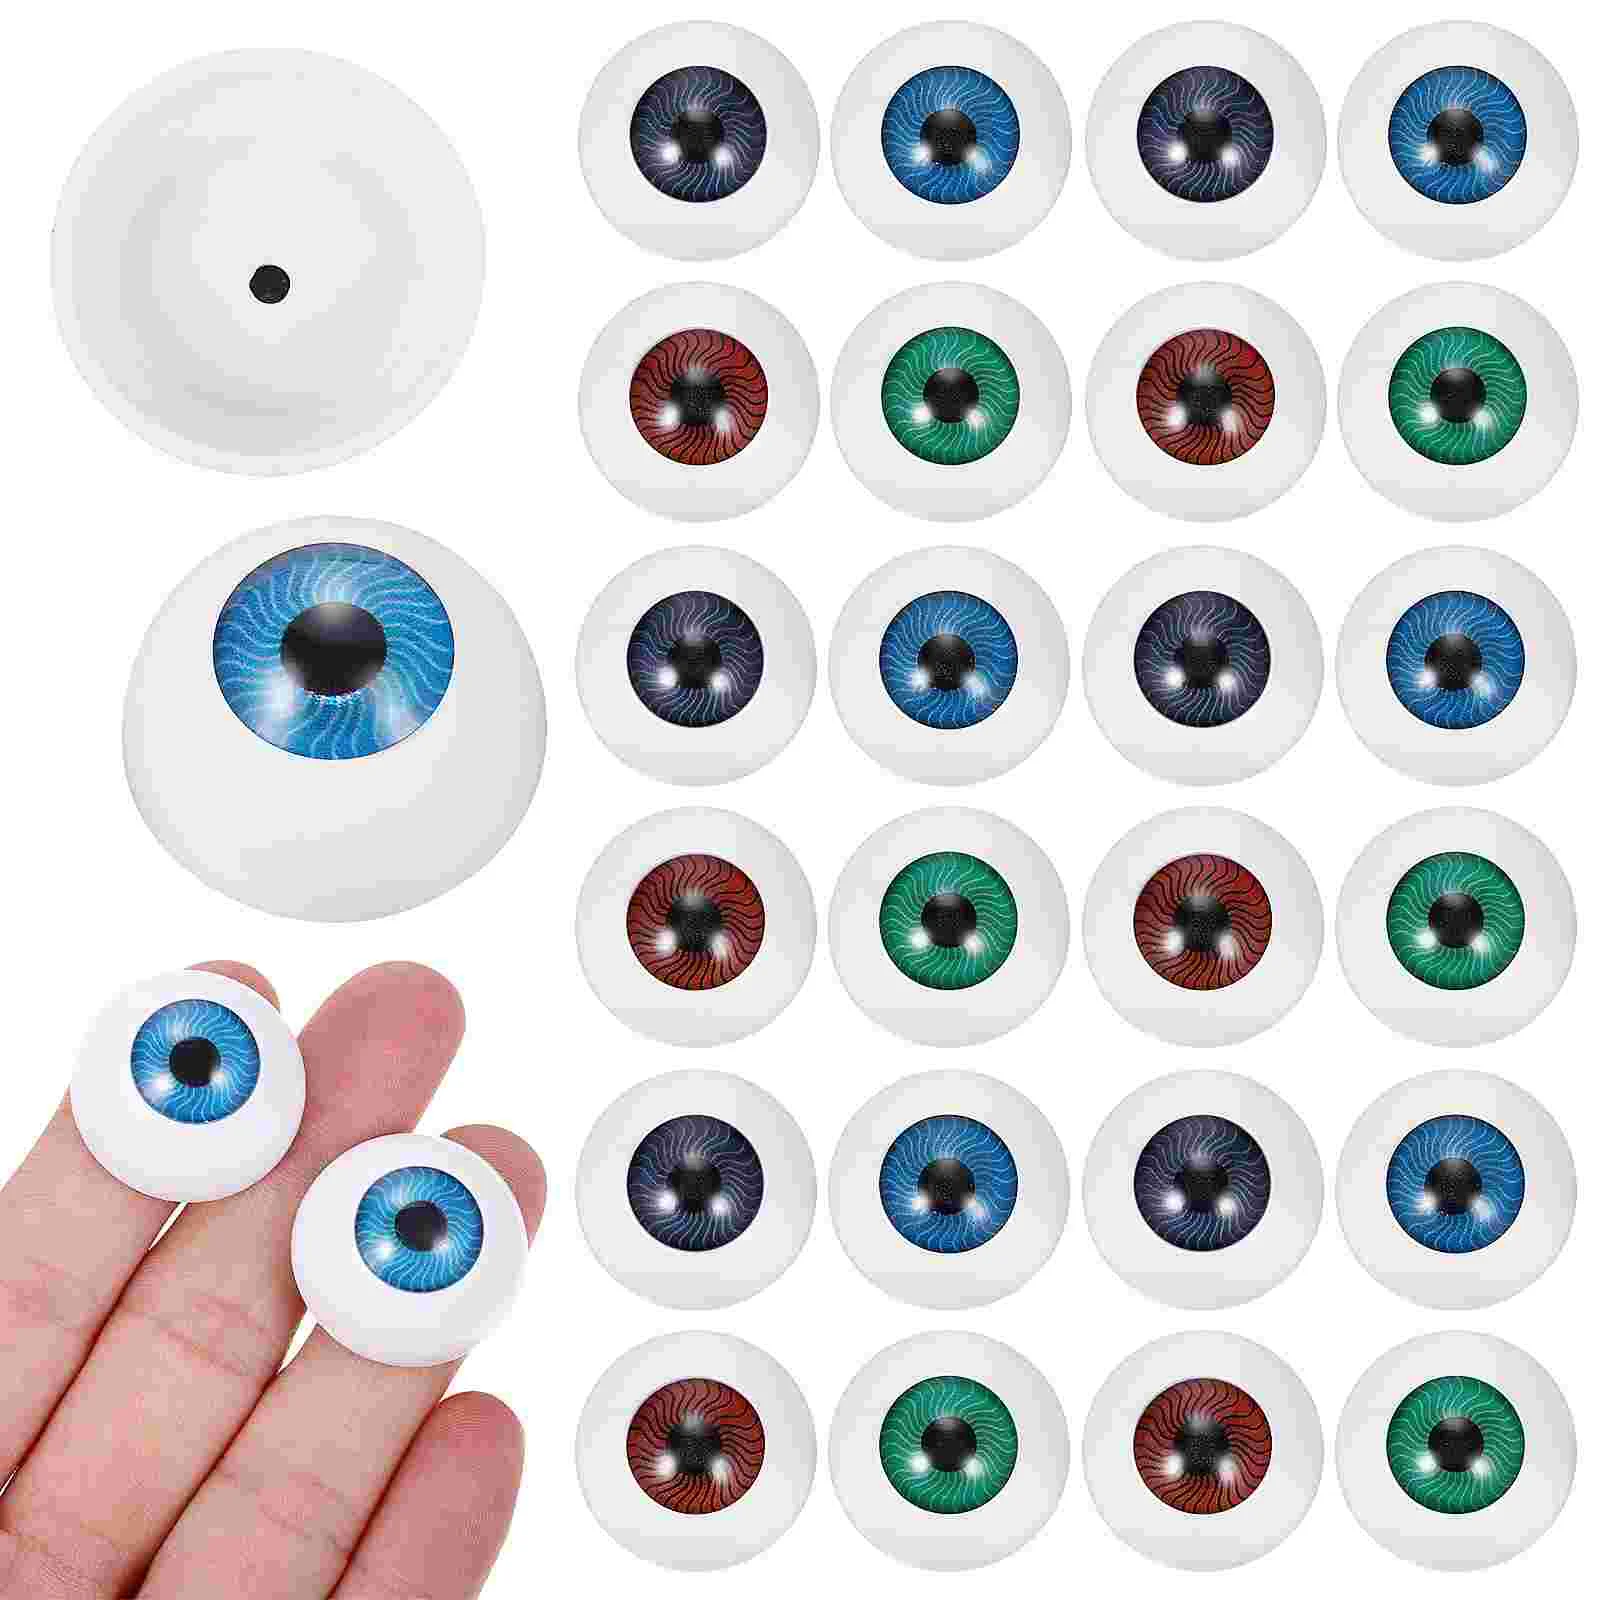 

30pcs Halloween Eyeballs Half Round Realistic Eyeballs Scary Props for Crafts Parties Decor